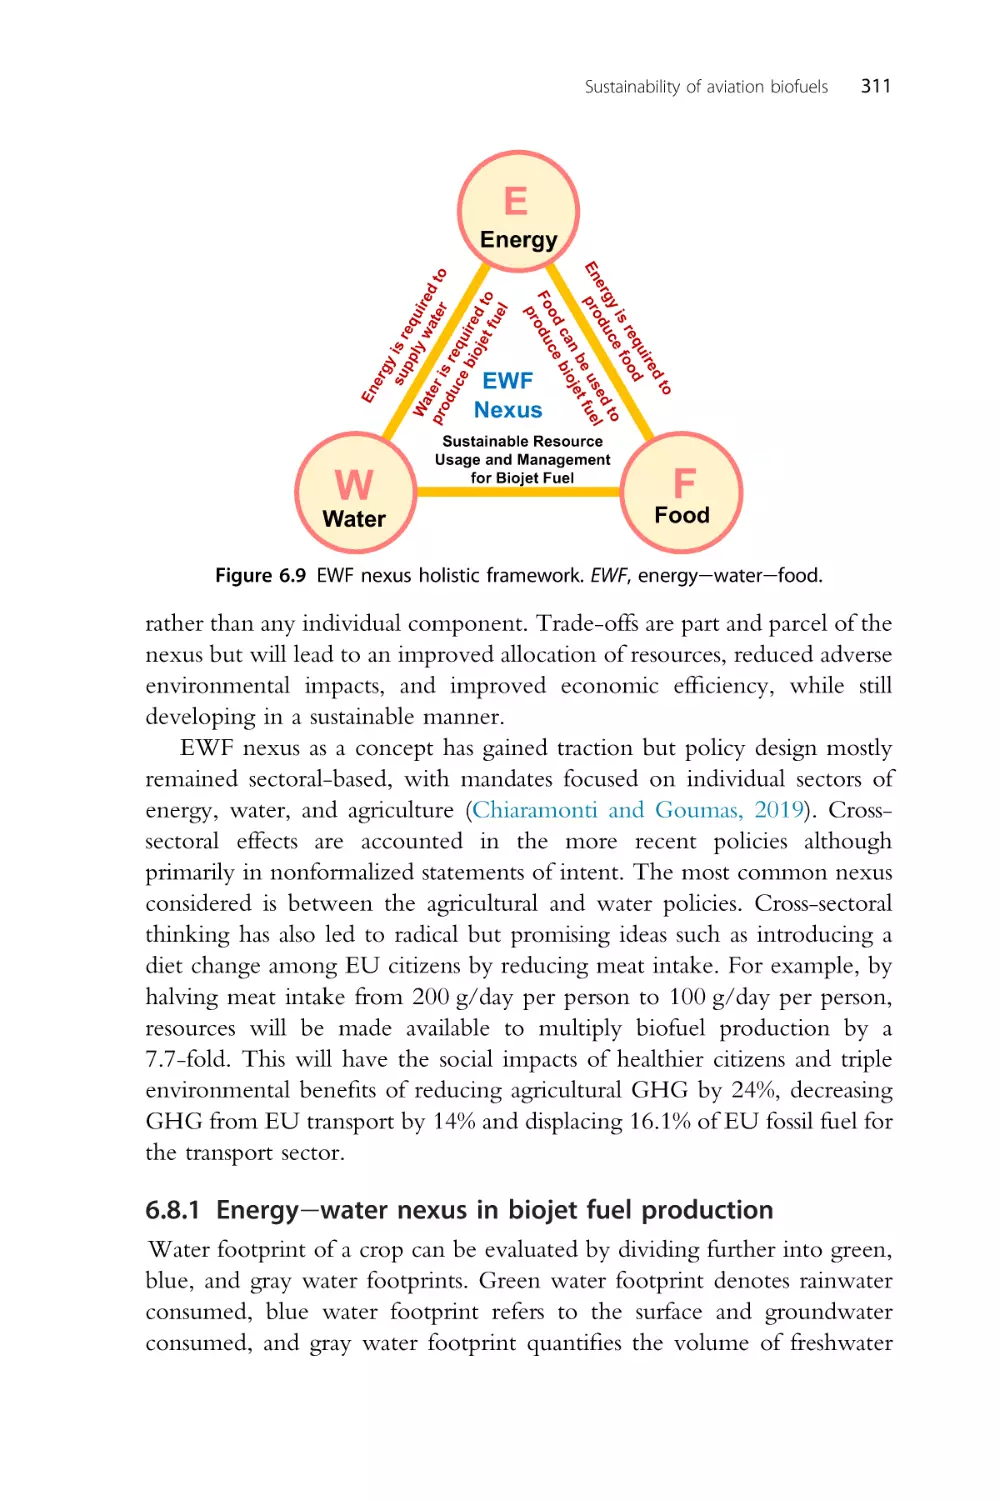 6.8.1 Energy–water nexus in biojet fuel production